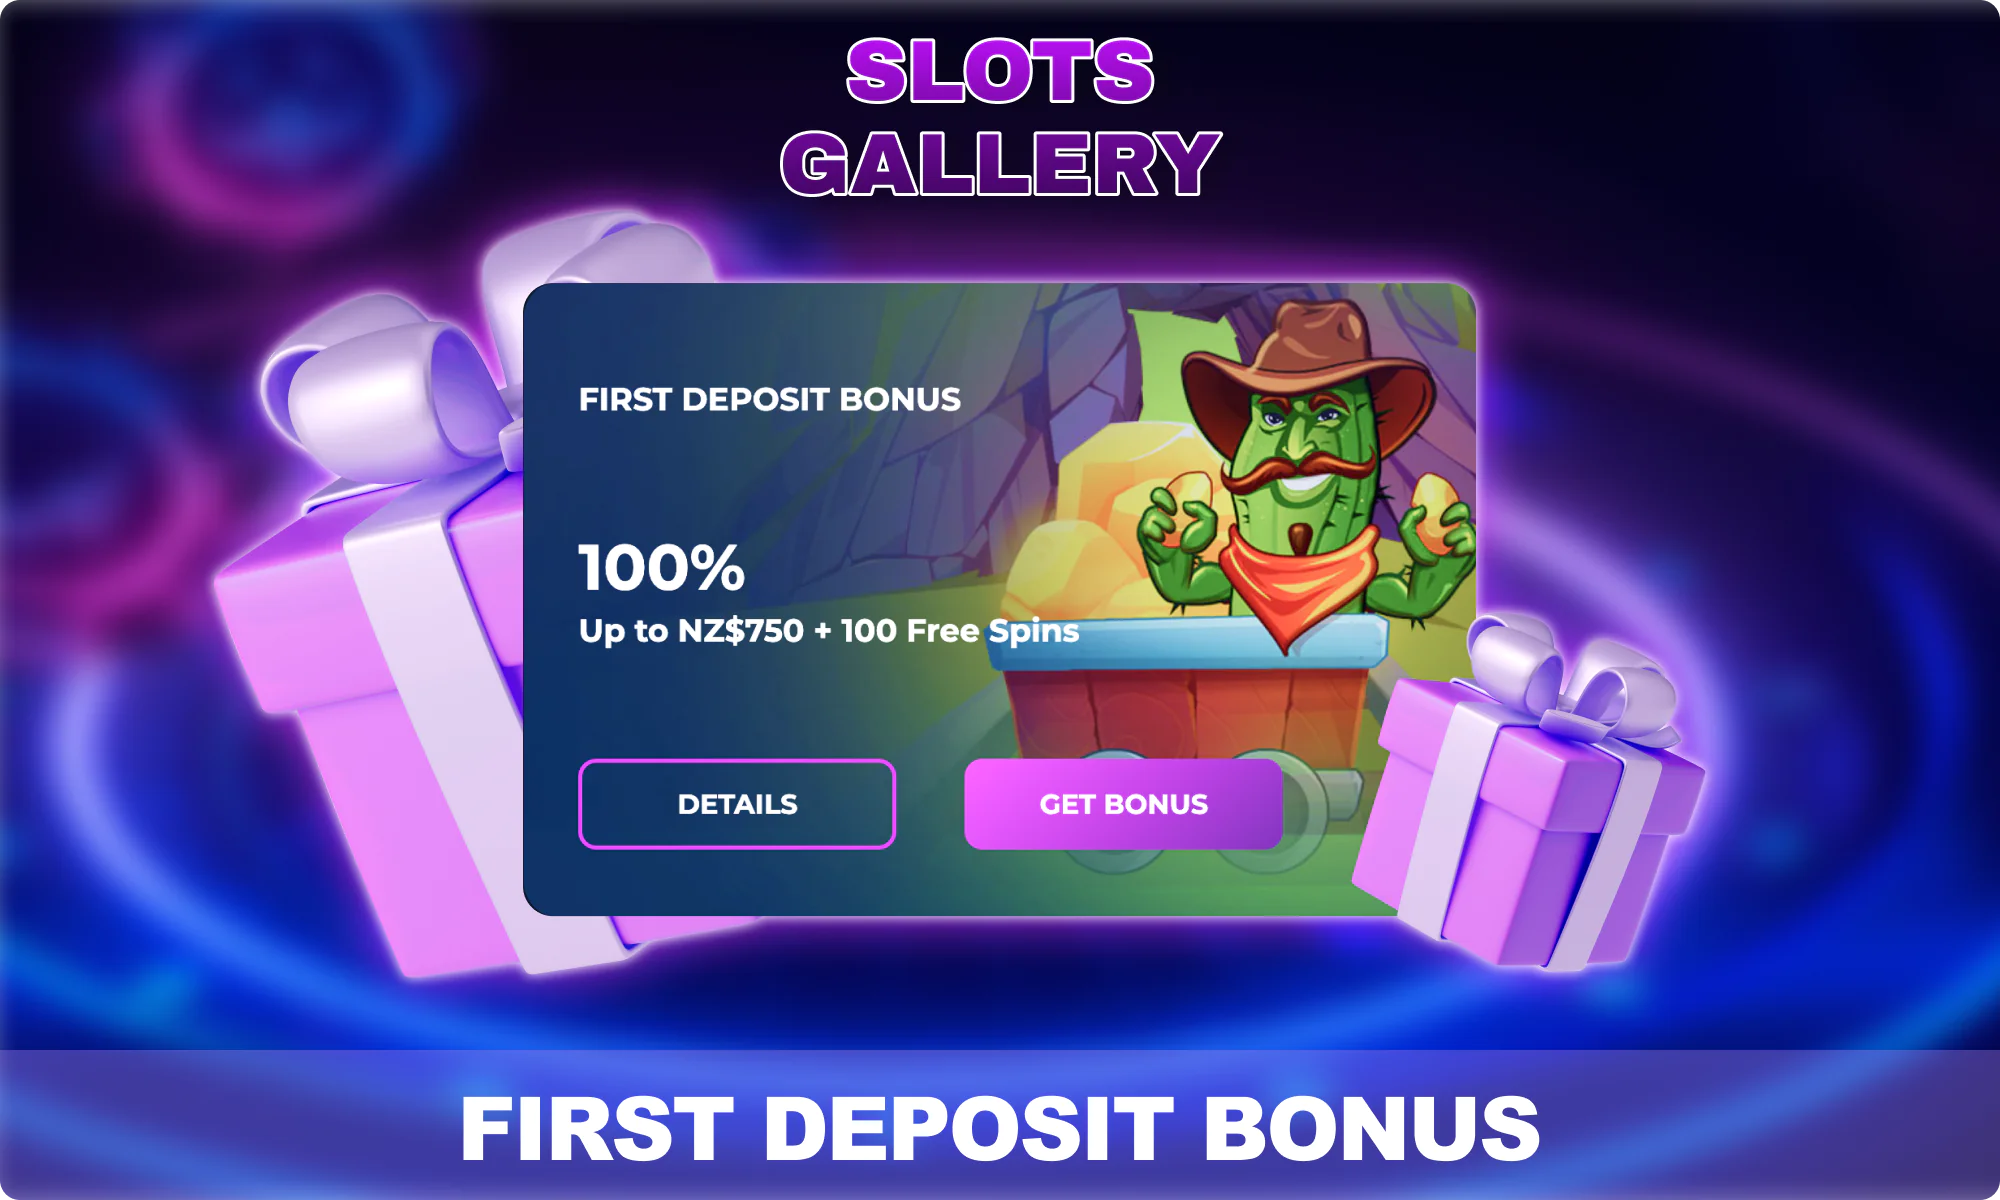 First Deposit Bonus - Slots Gallery New Zeland